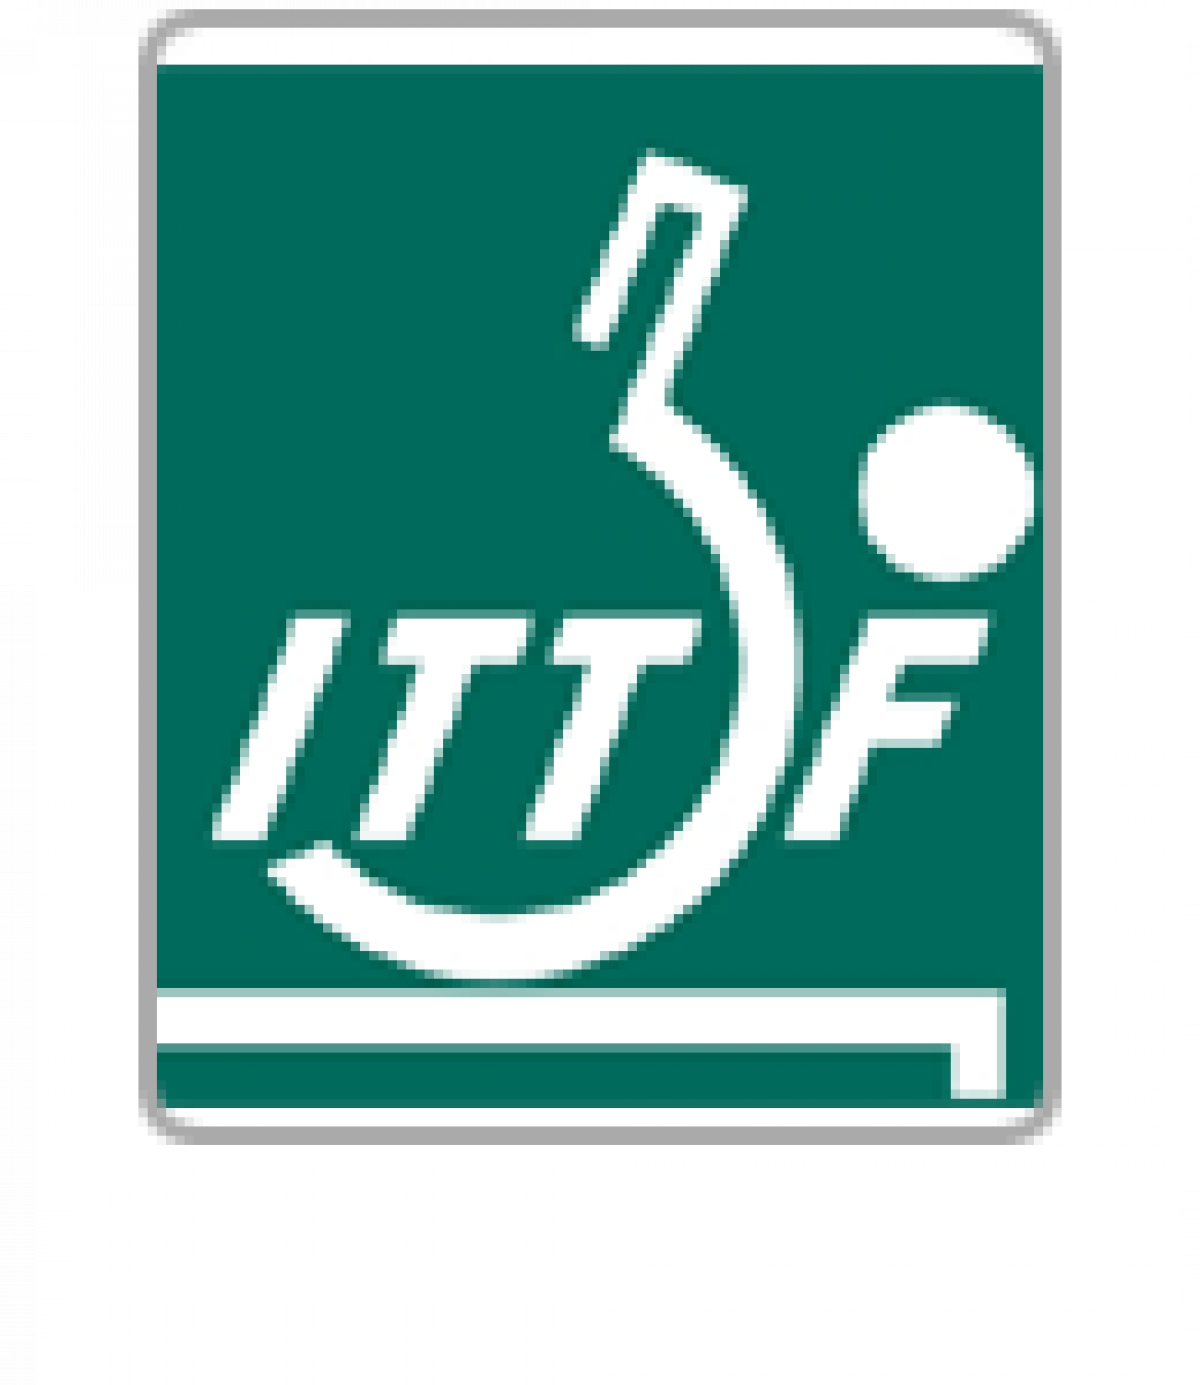 ITTF (International Table Tennis Federation)